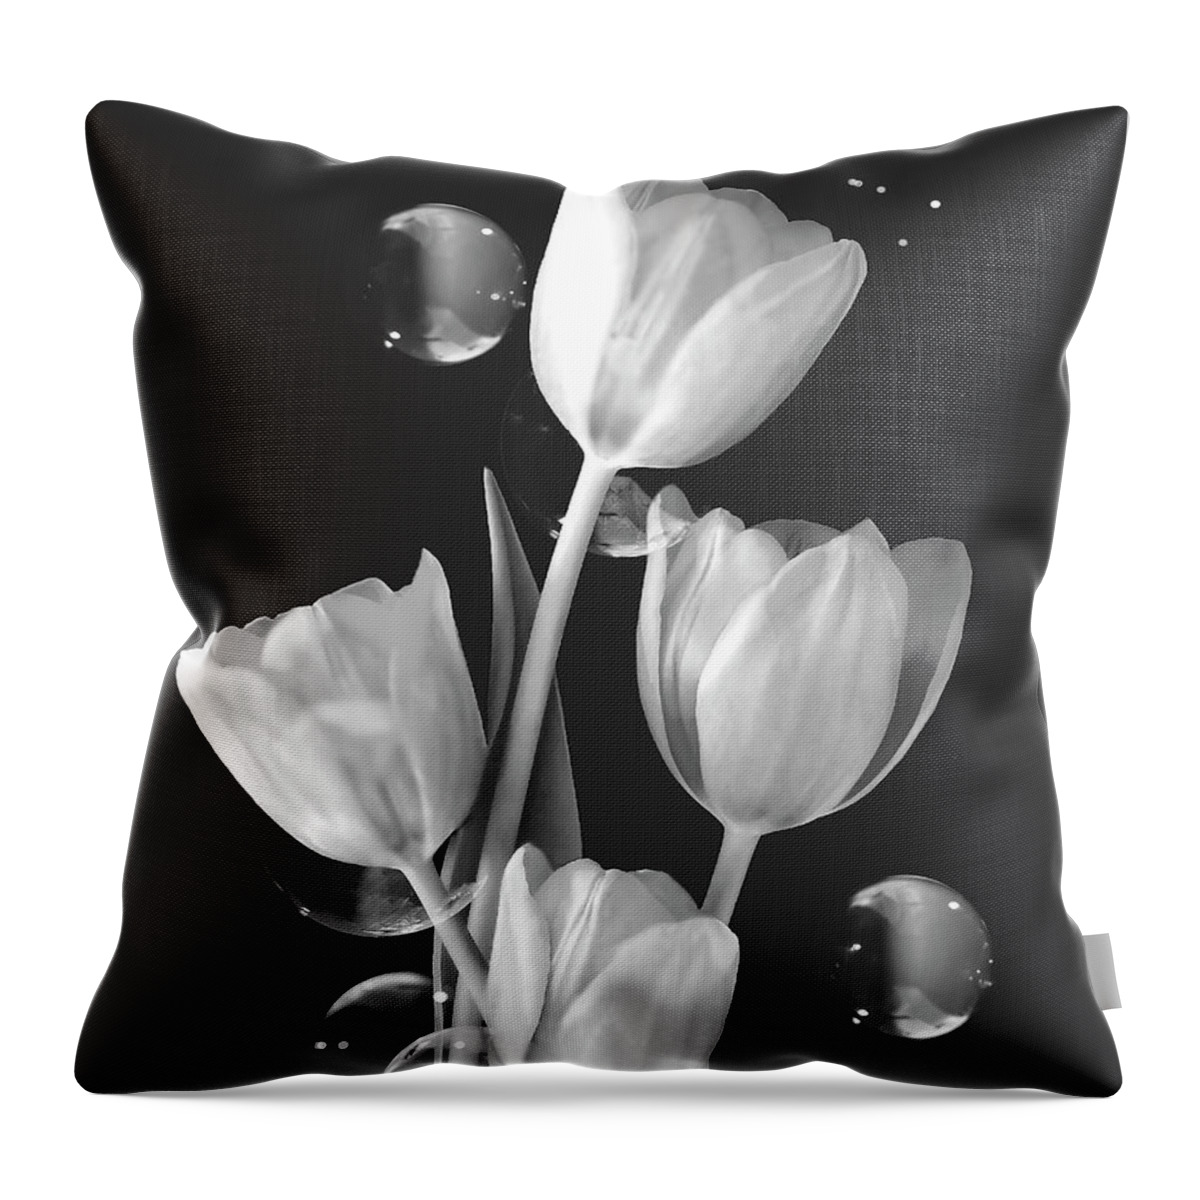 Tulip Throw Pillow featuring the photograph Artistic Tulip Bouquet 2 by Johanna Hurmerinta